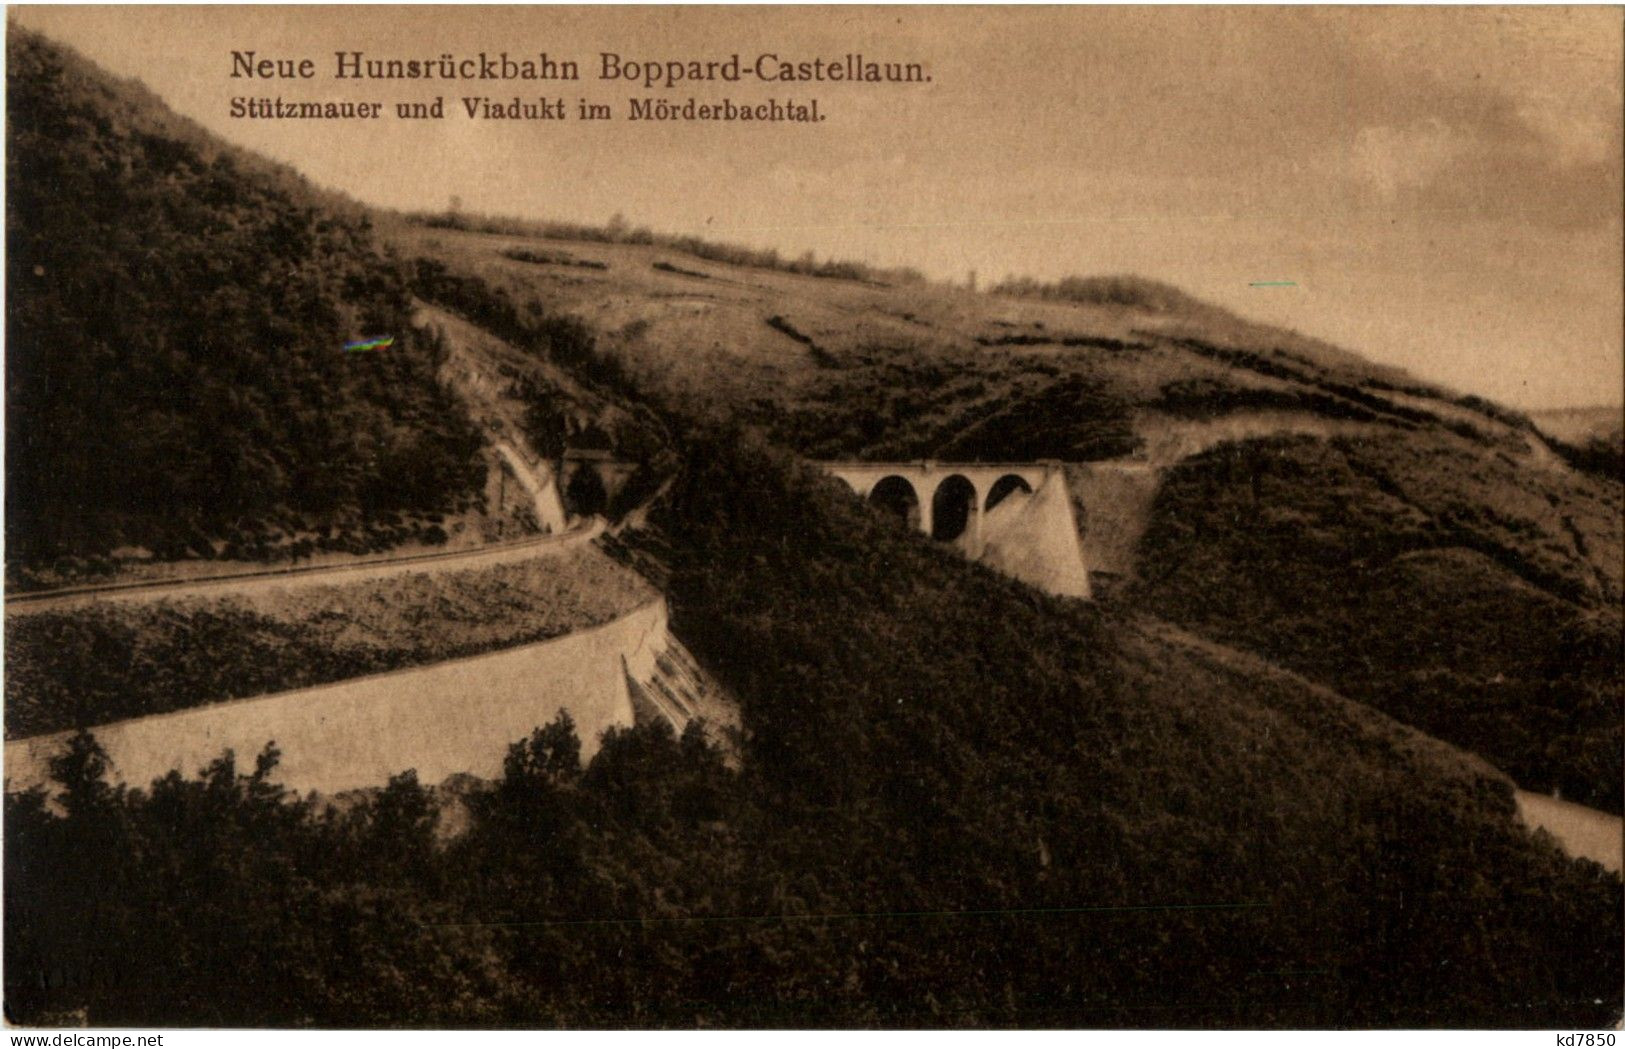 Boppard - Castellaun - Neue Hunsrückbahn - Boppard